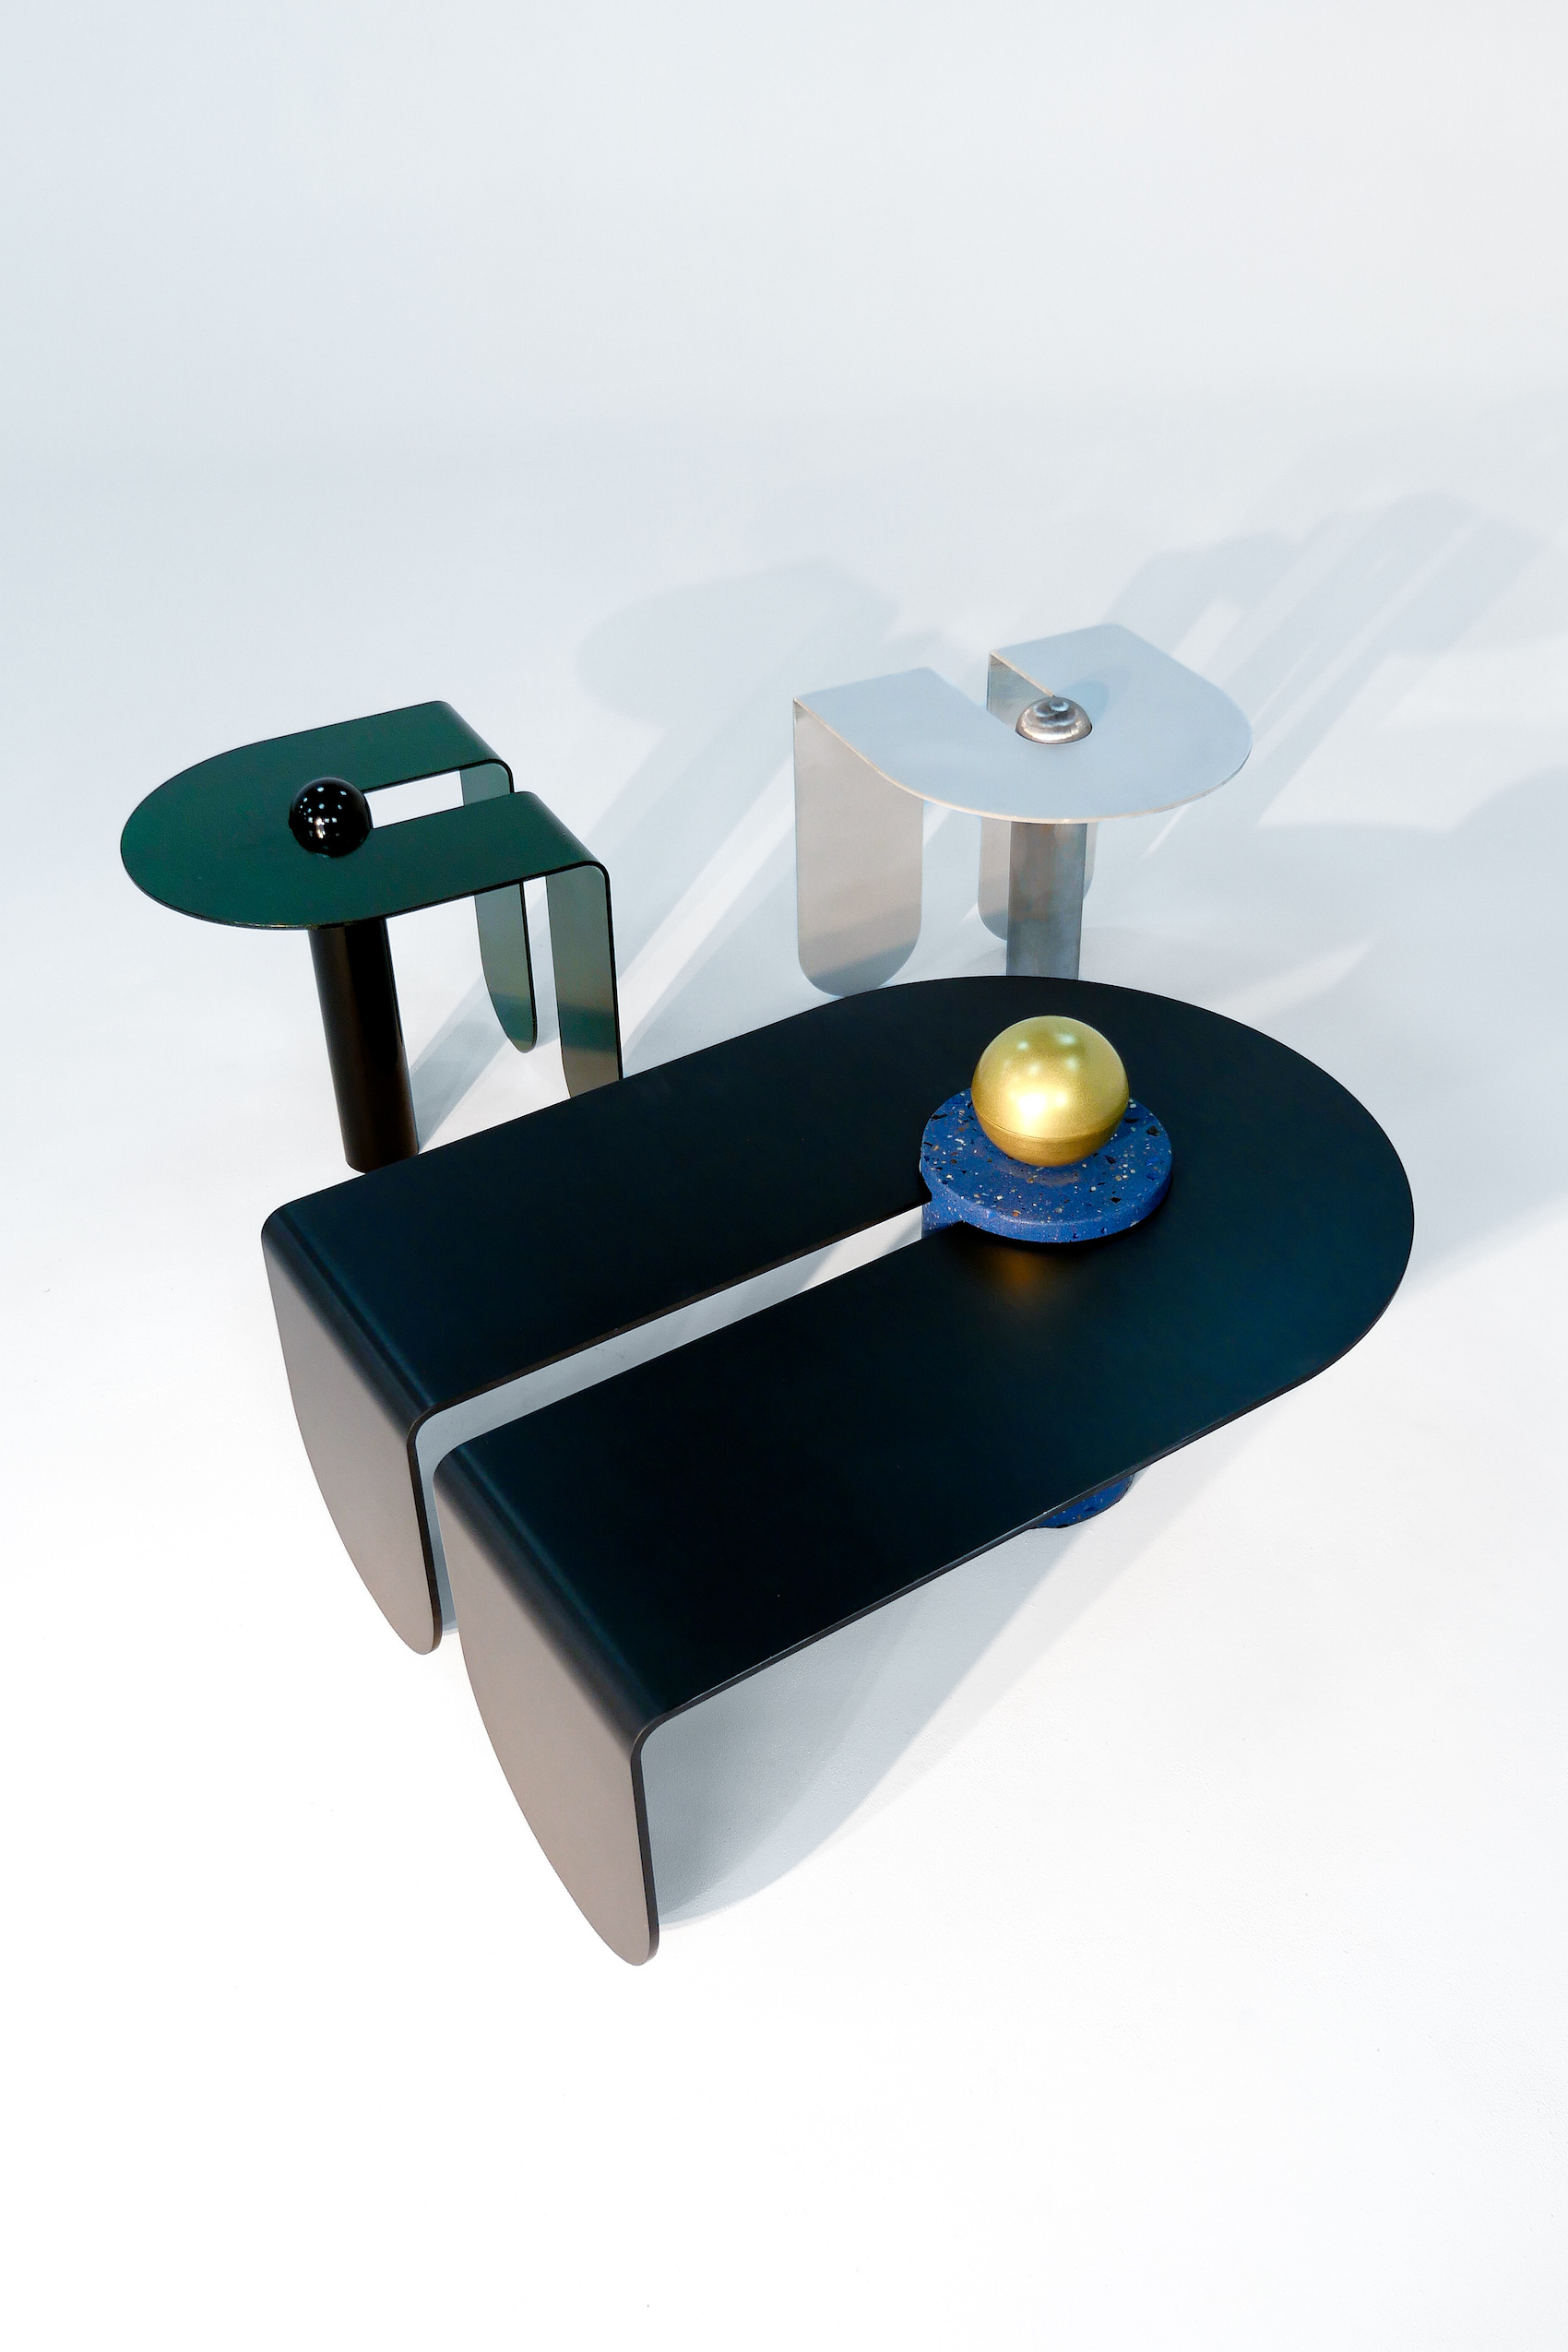 U&I Coffee Table by Birnam Wood Studio, Suna Bonometti